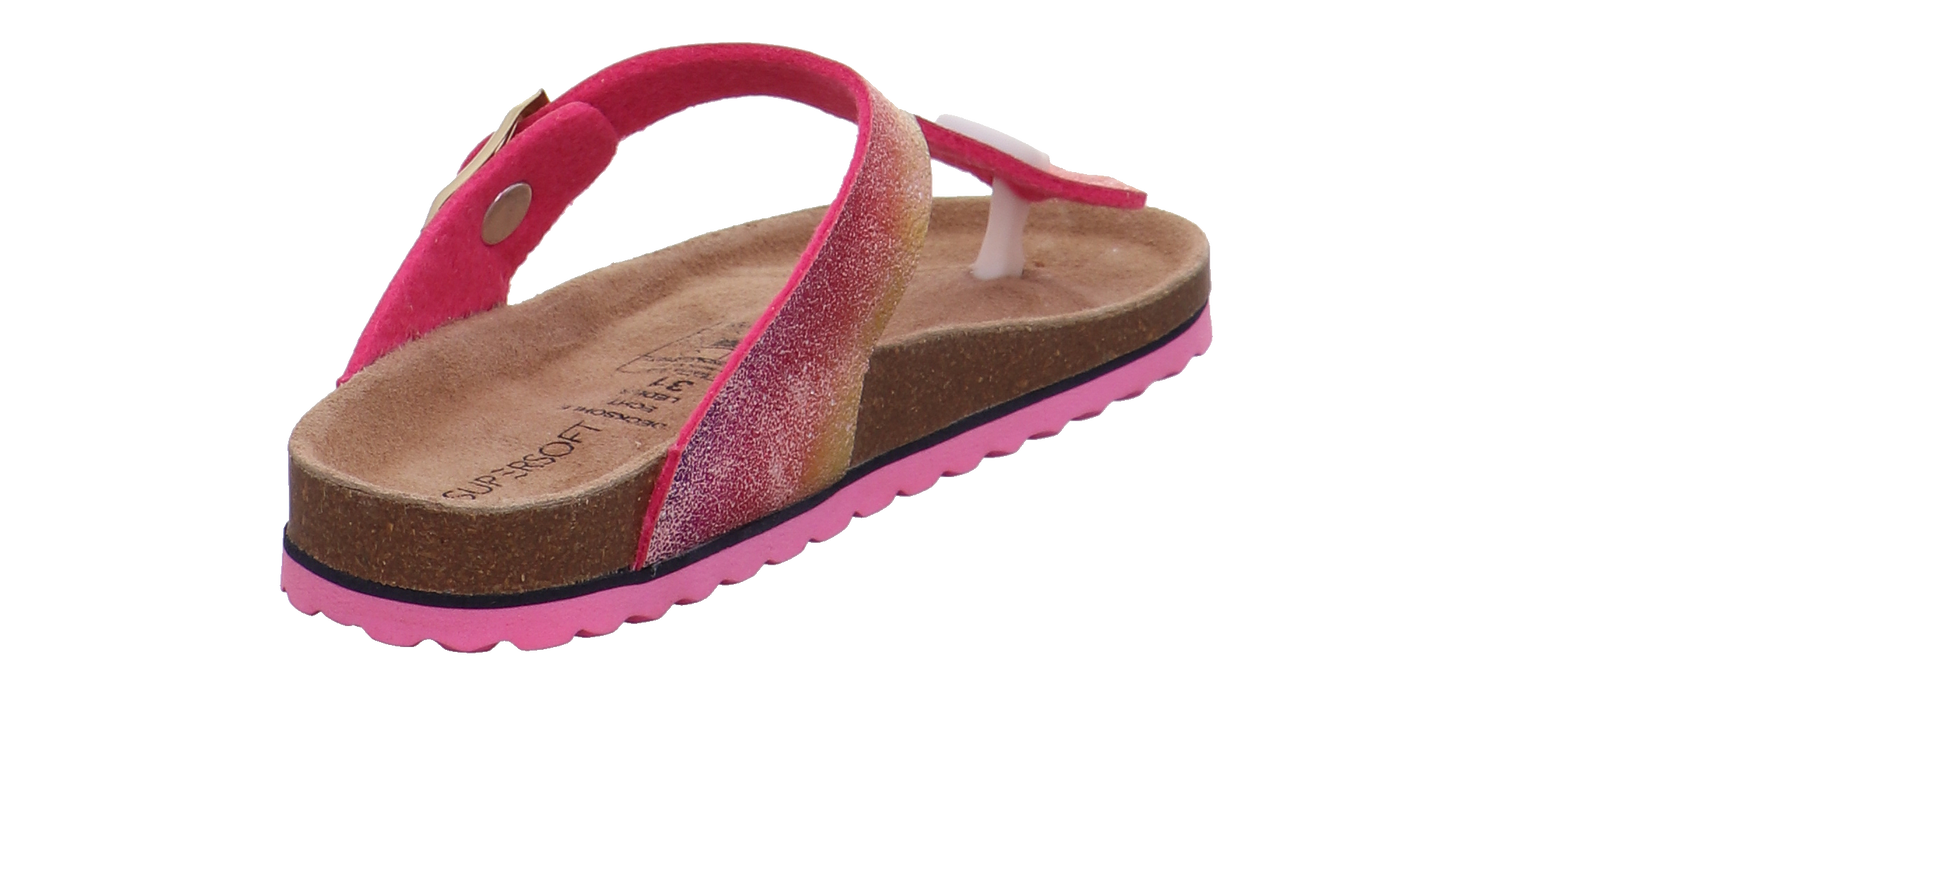 Supersoft Offene Schuhe rose Bild5